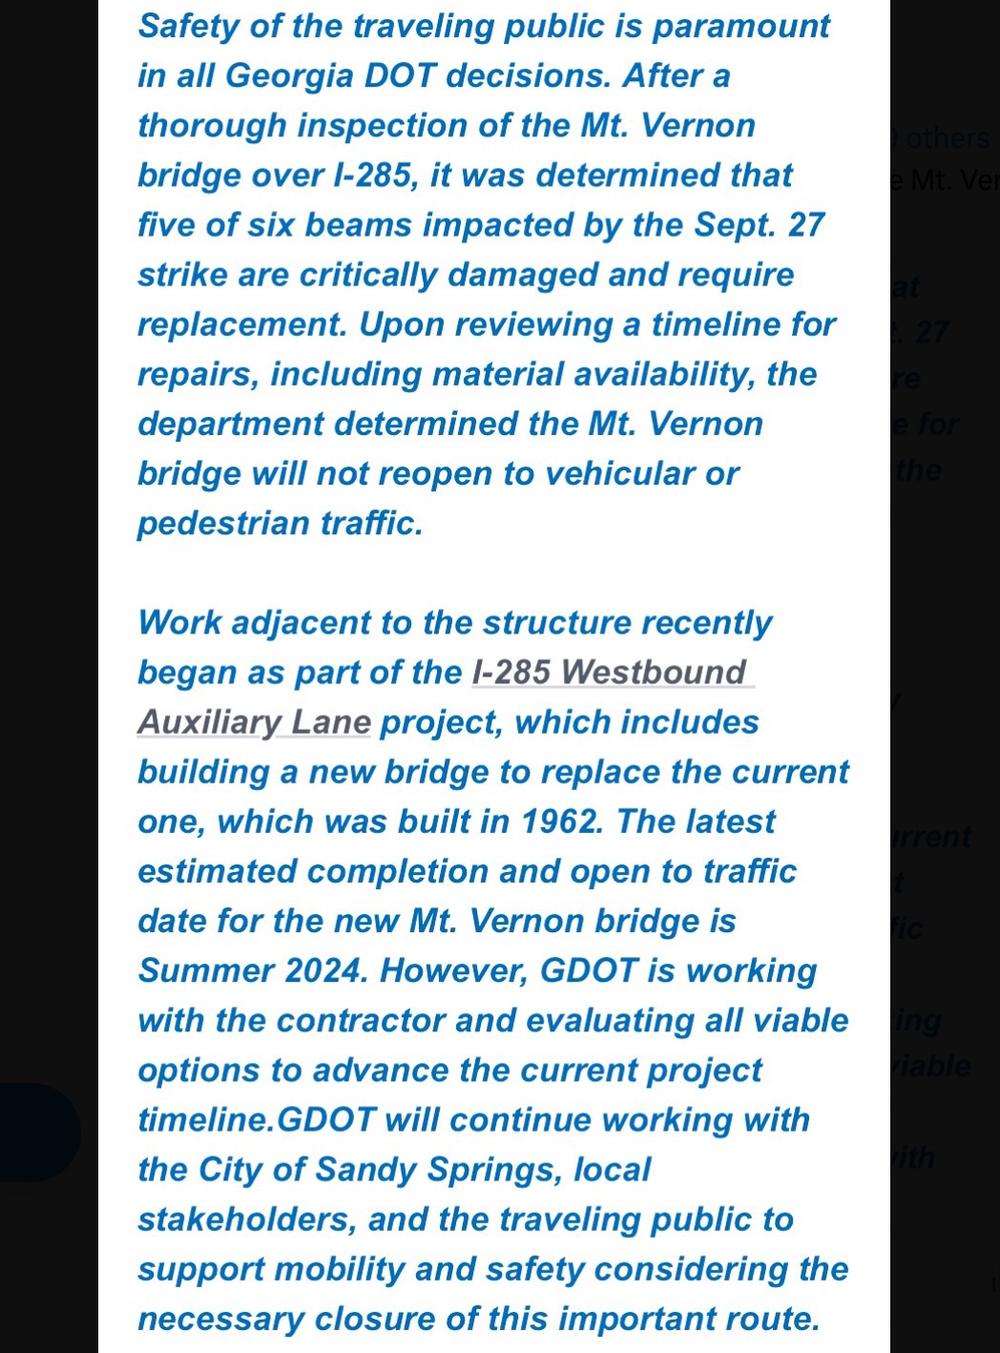 Screenshot of Georgia Department of Transportation statement on closing Mt. Vernon bridge